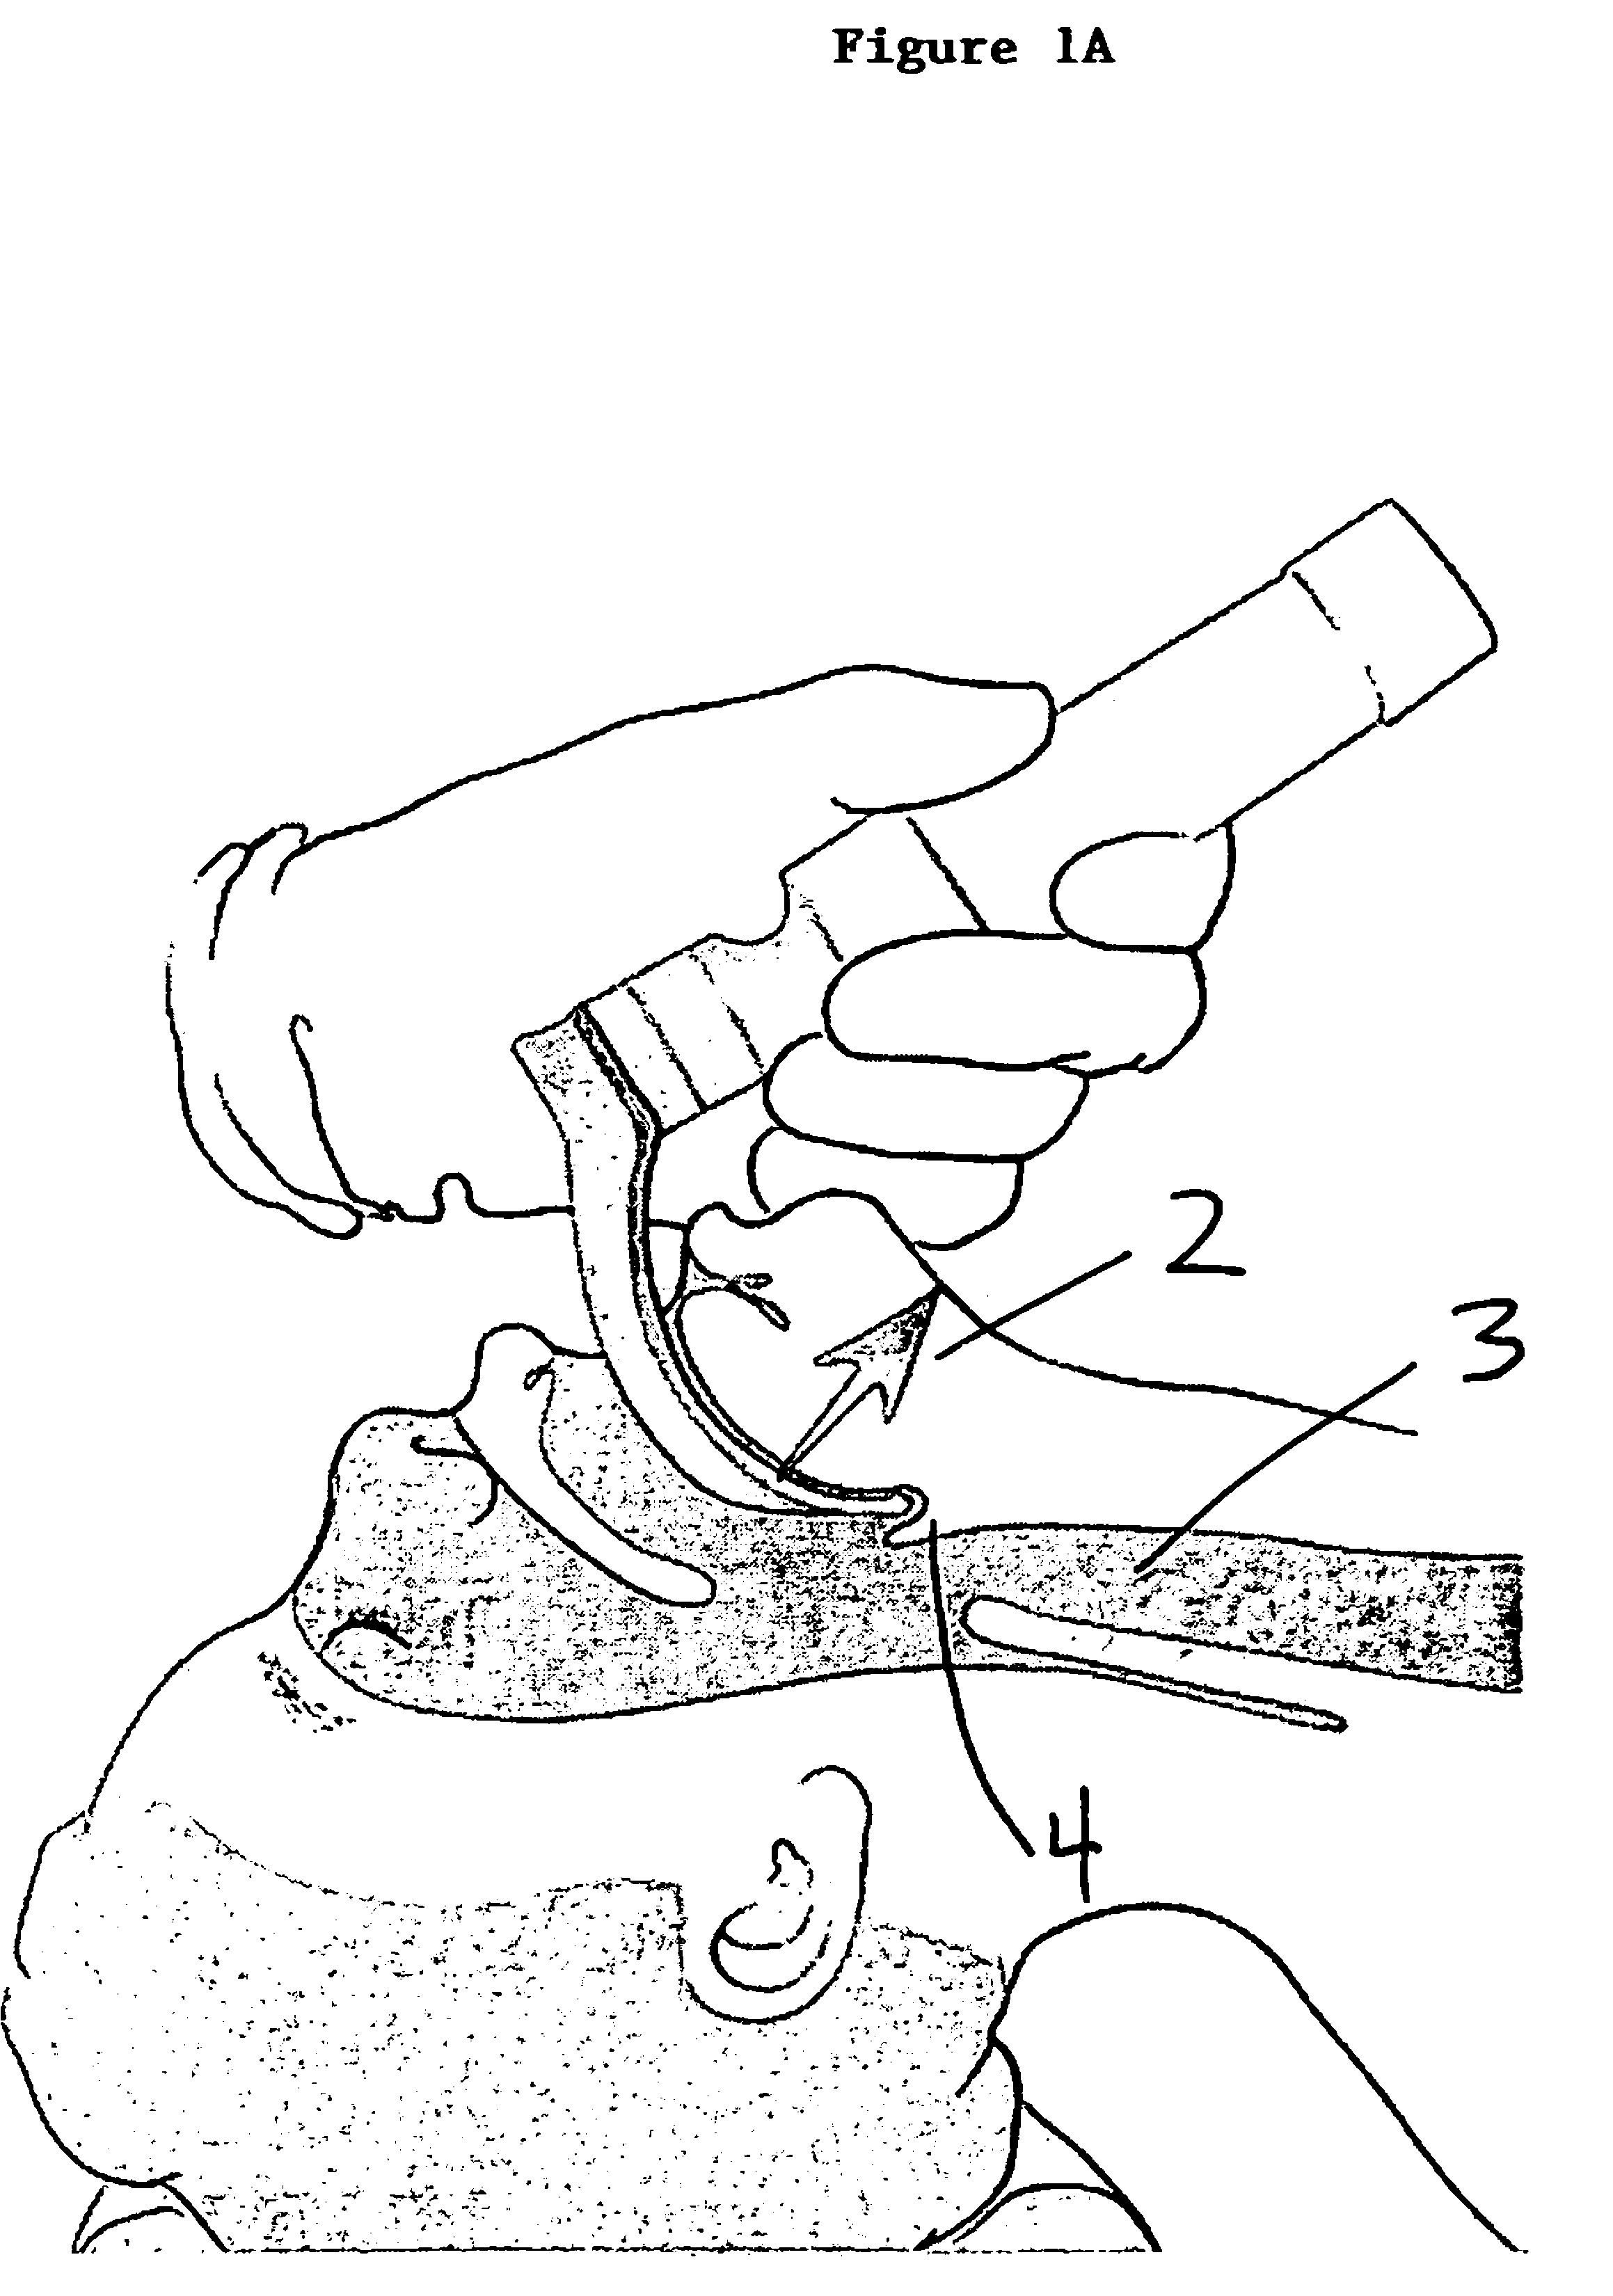 Apparatus for orotracheal intubation